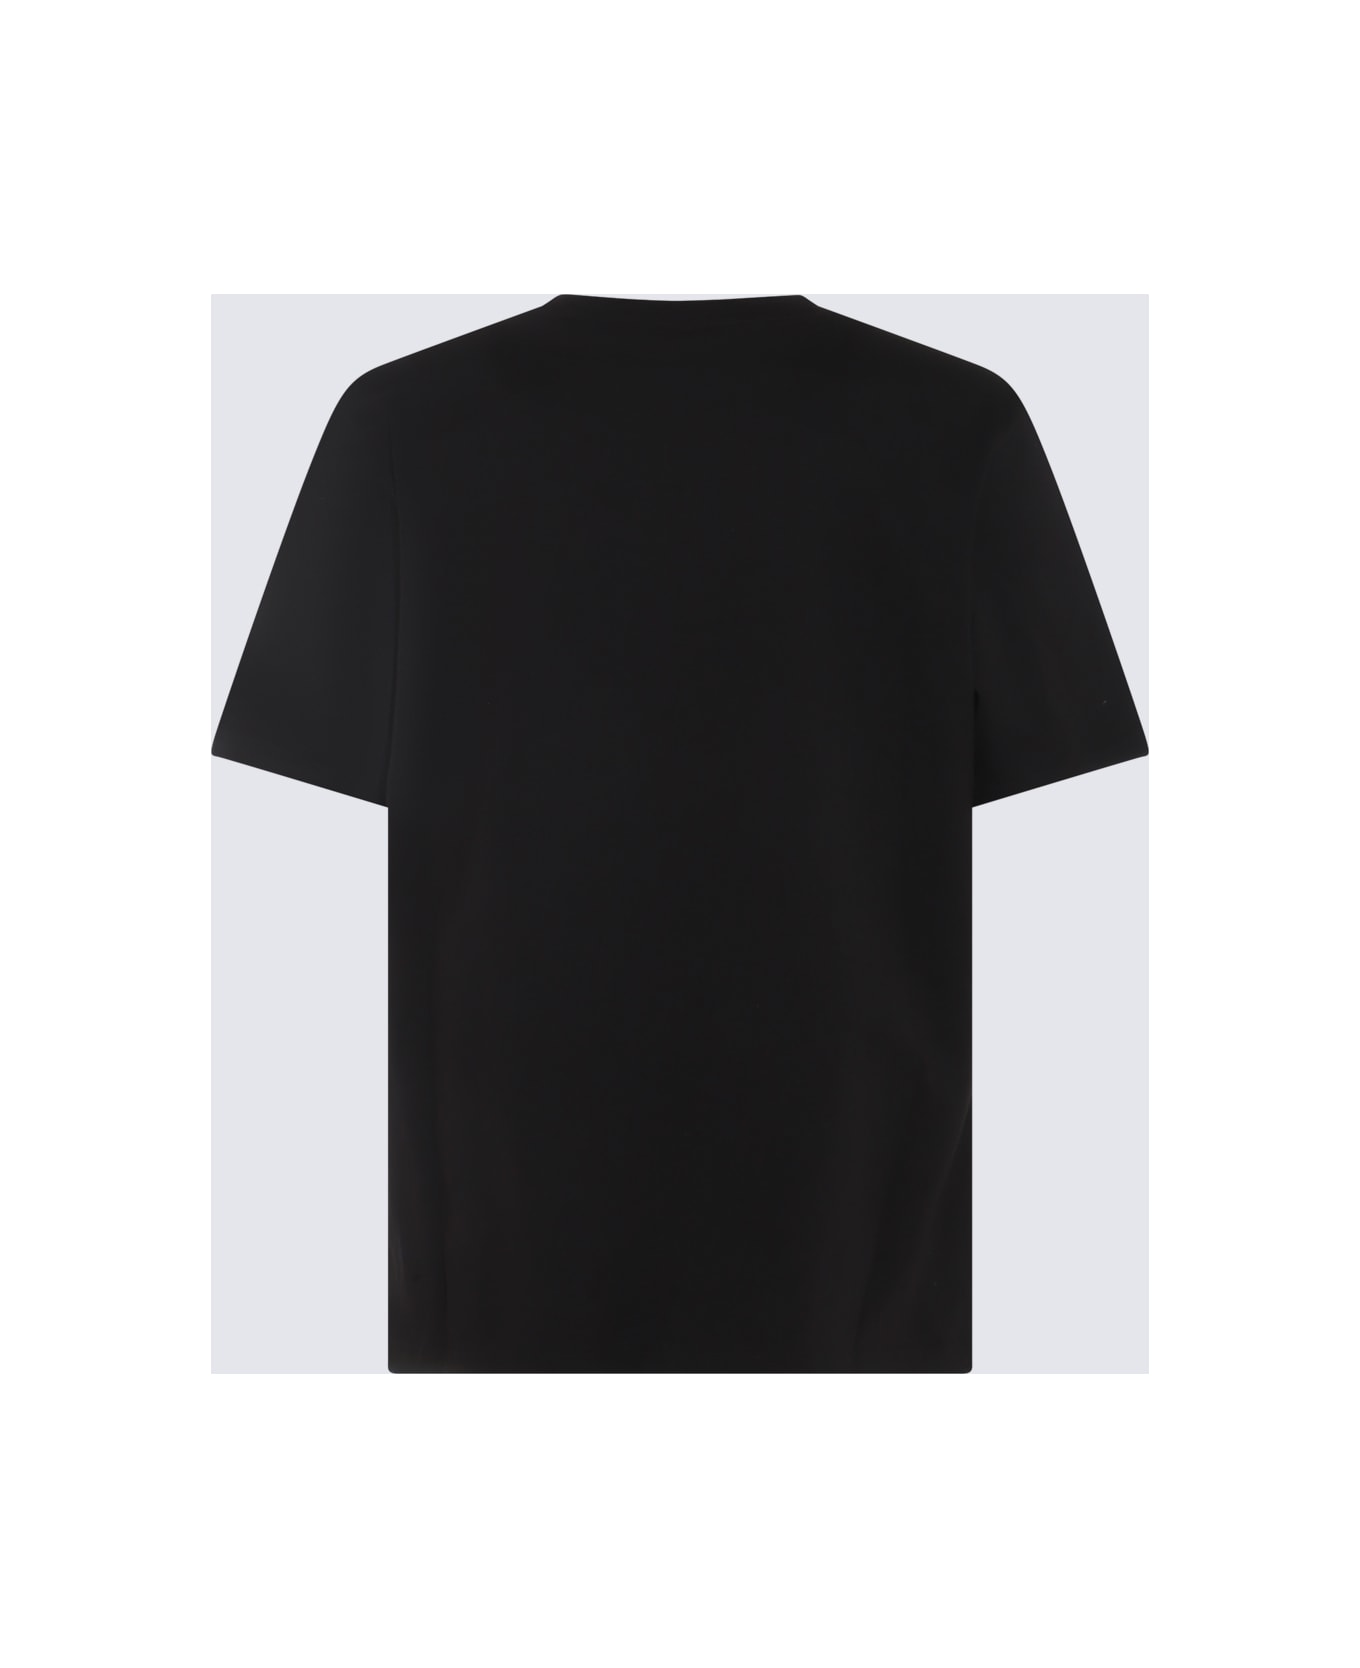 Daily Paper Black Cotton T-shirt - Black シャツ